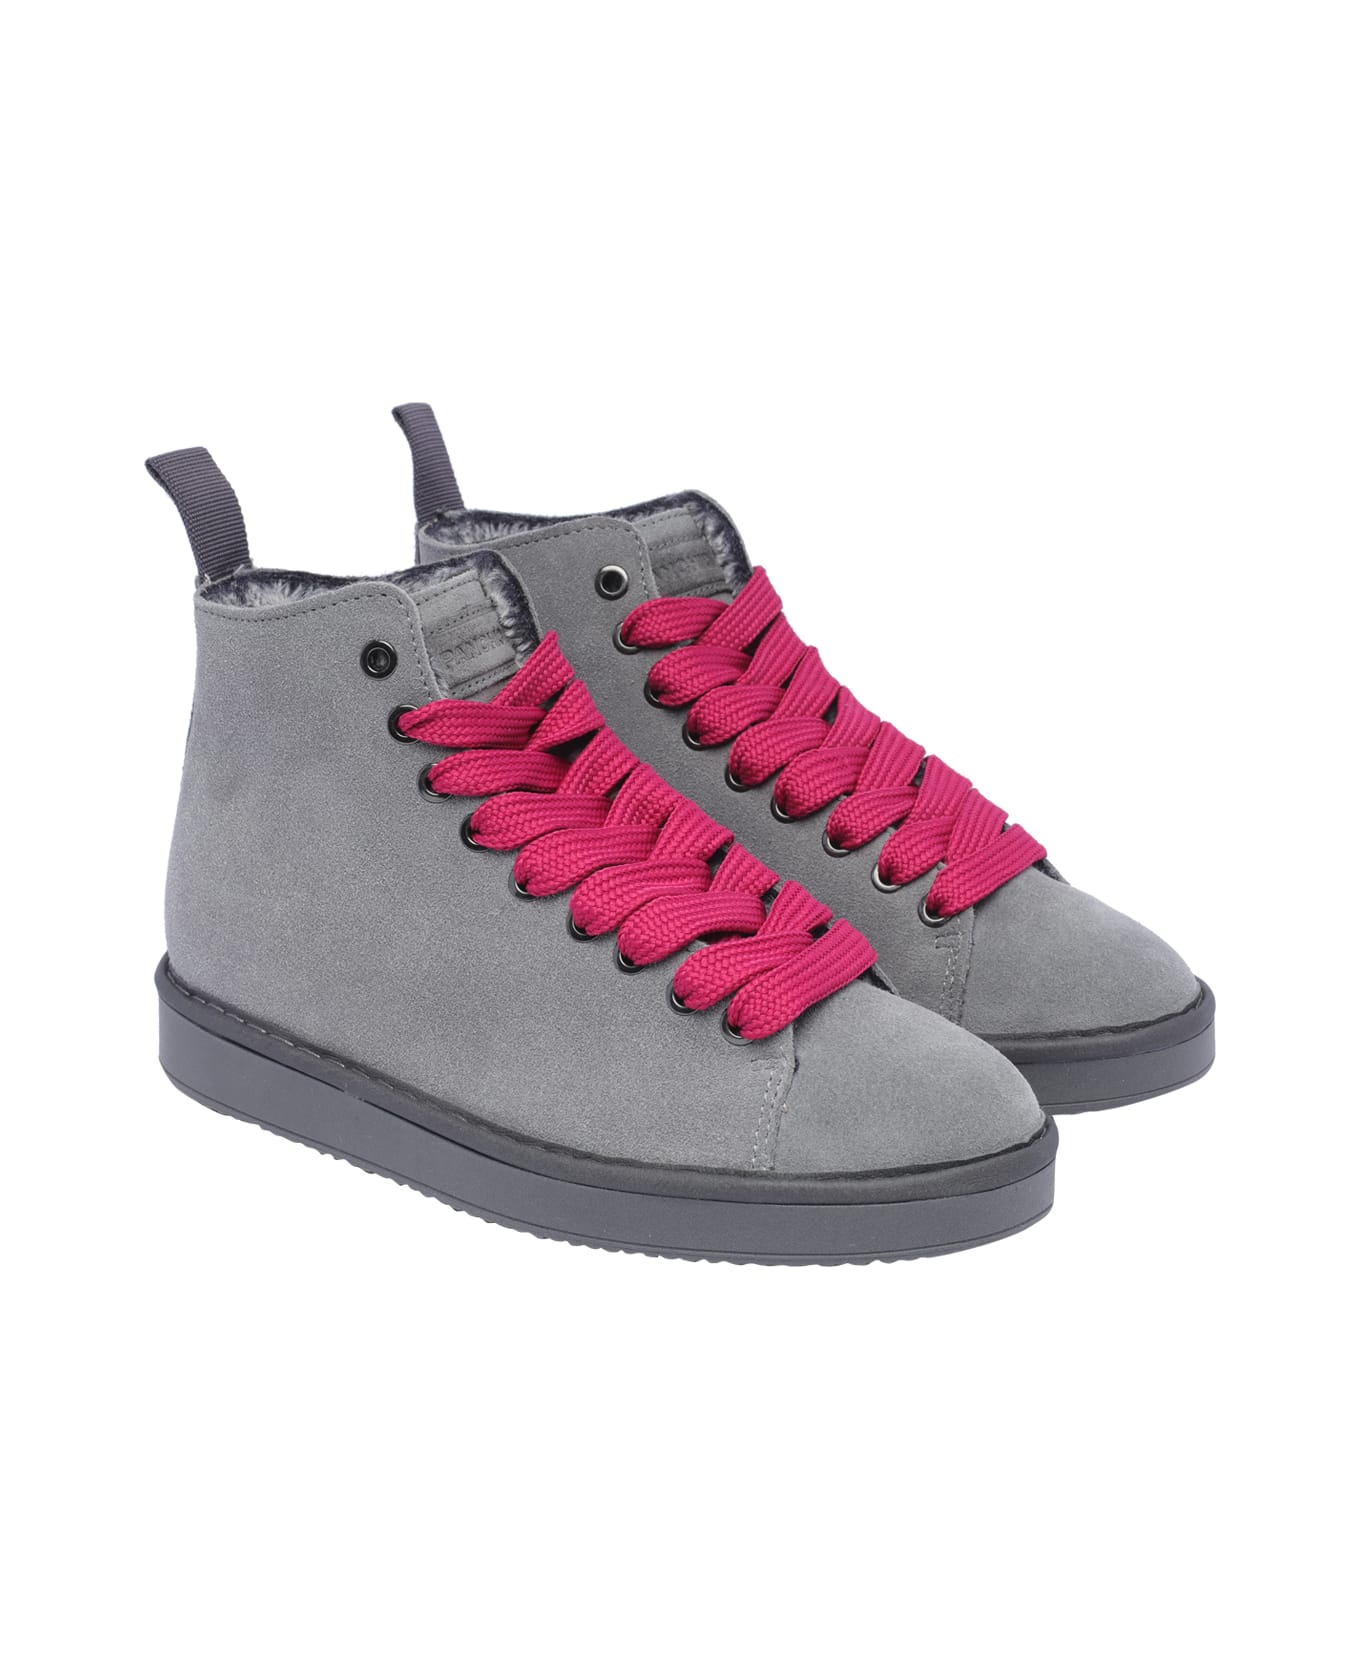 Panchic Laced Up Shoes - Grey Fuchsia